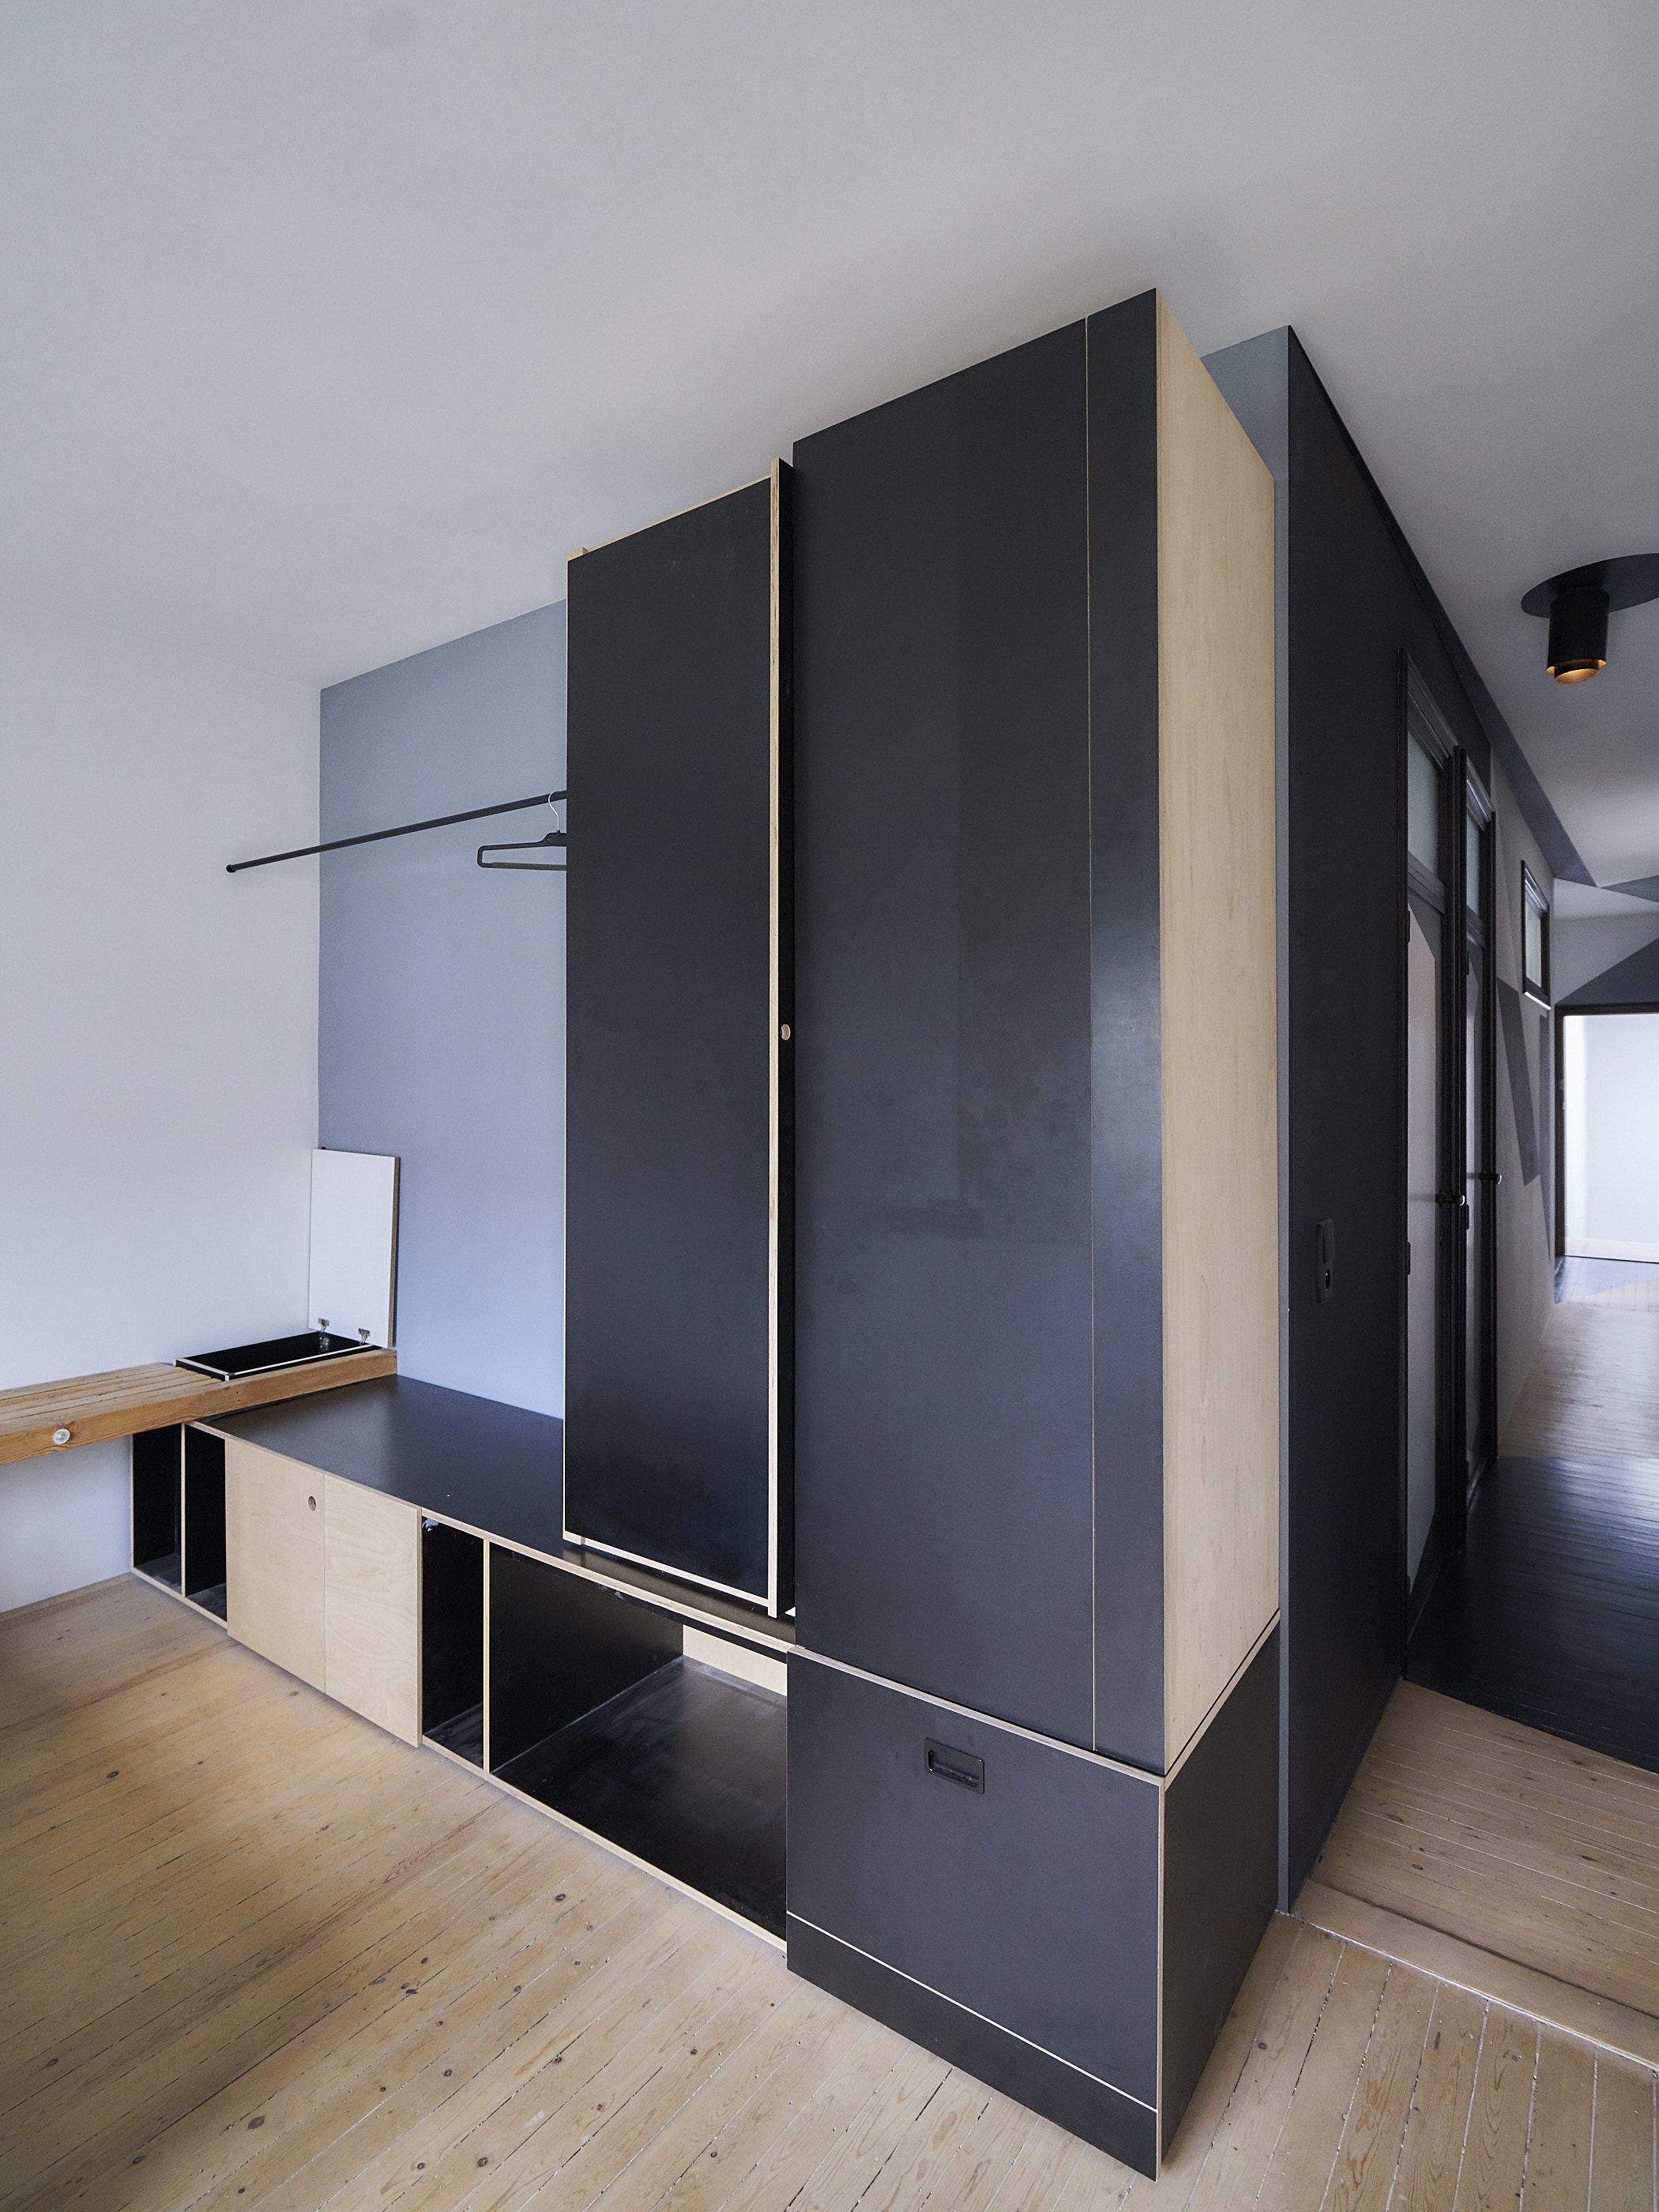 built-in bedroom cabinetry